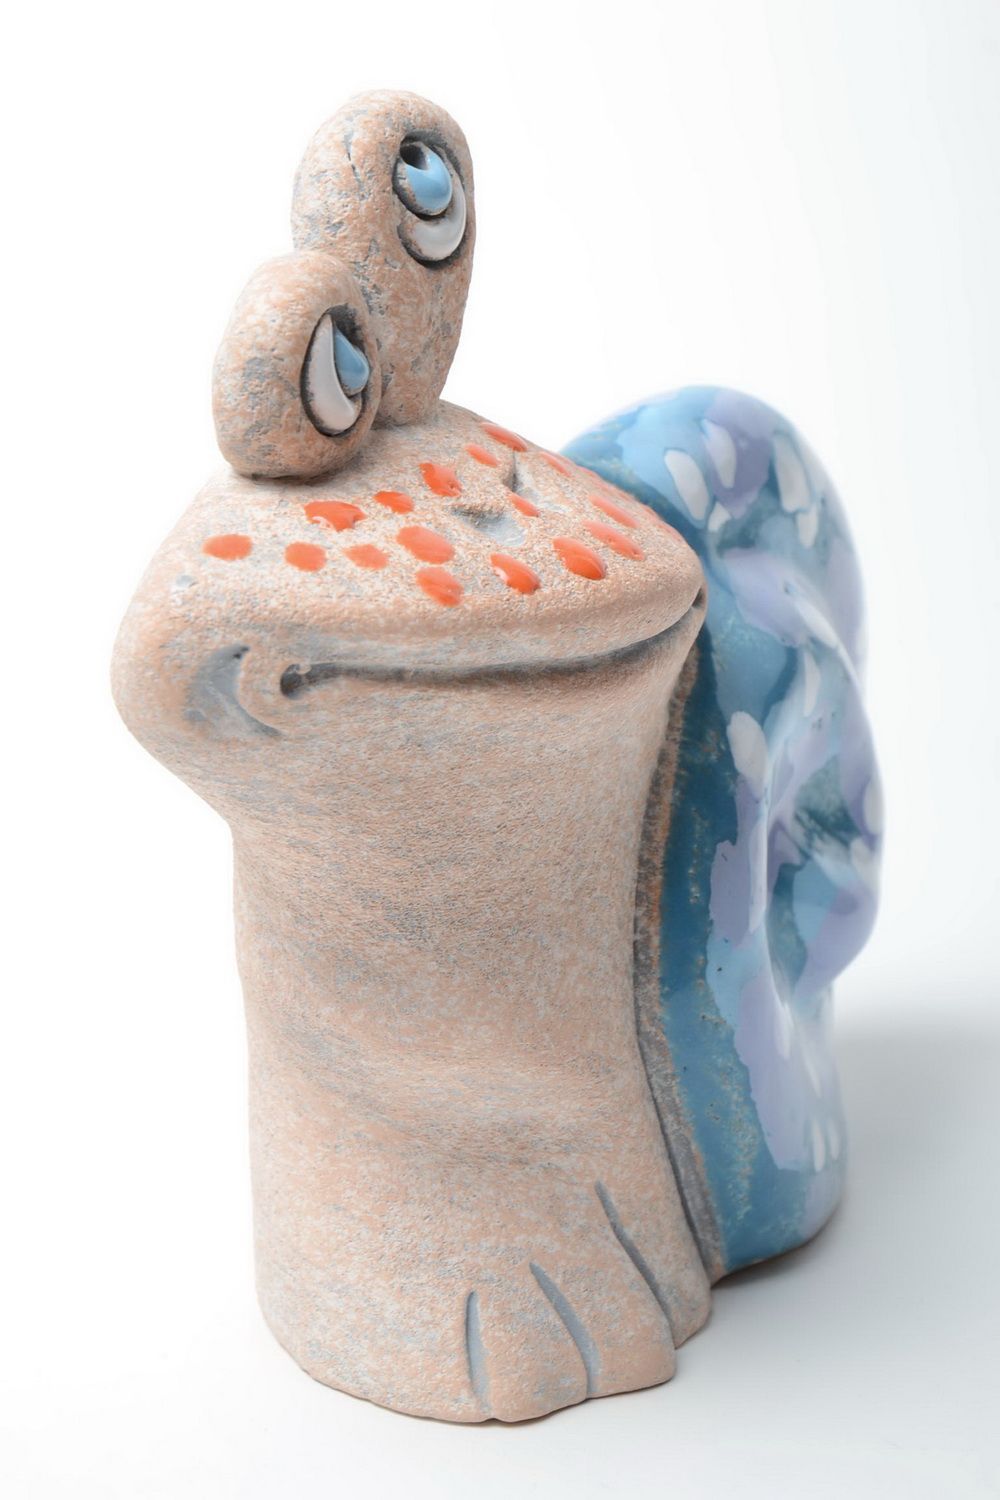 Tirelire en céramique peinte faite main cadeau original en forme d'escargot photo 2